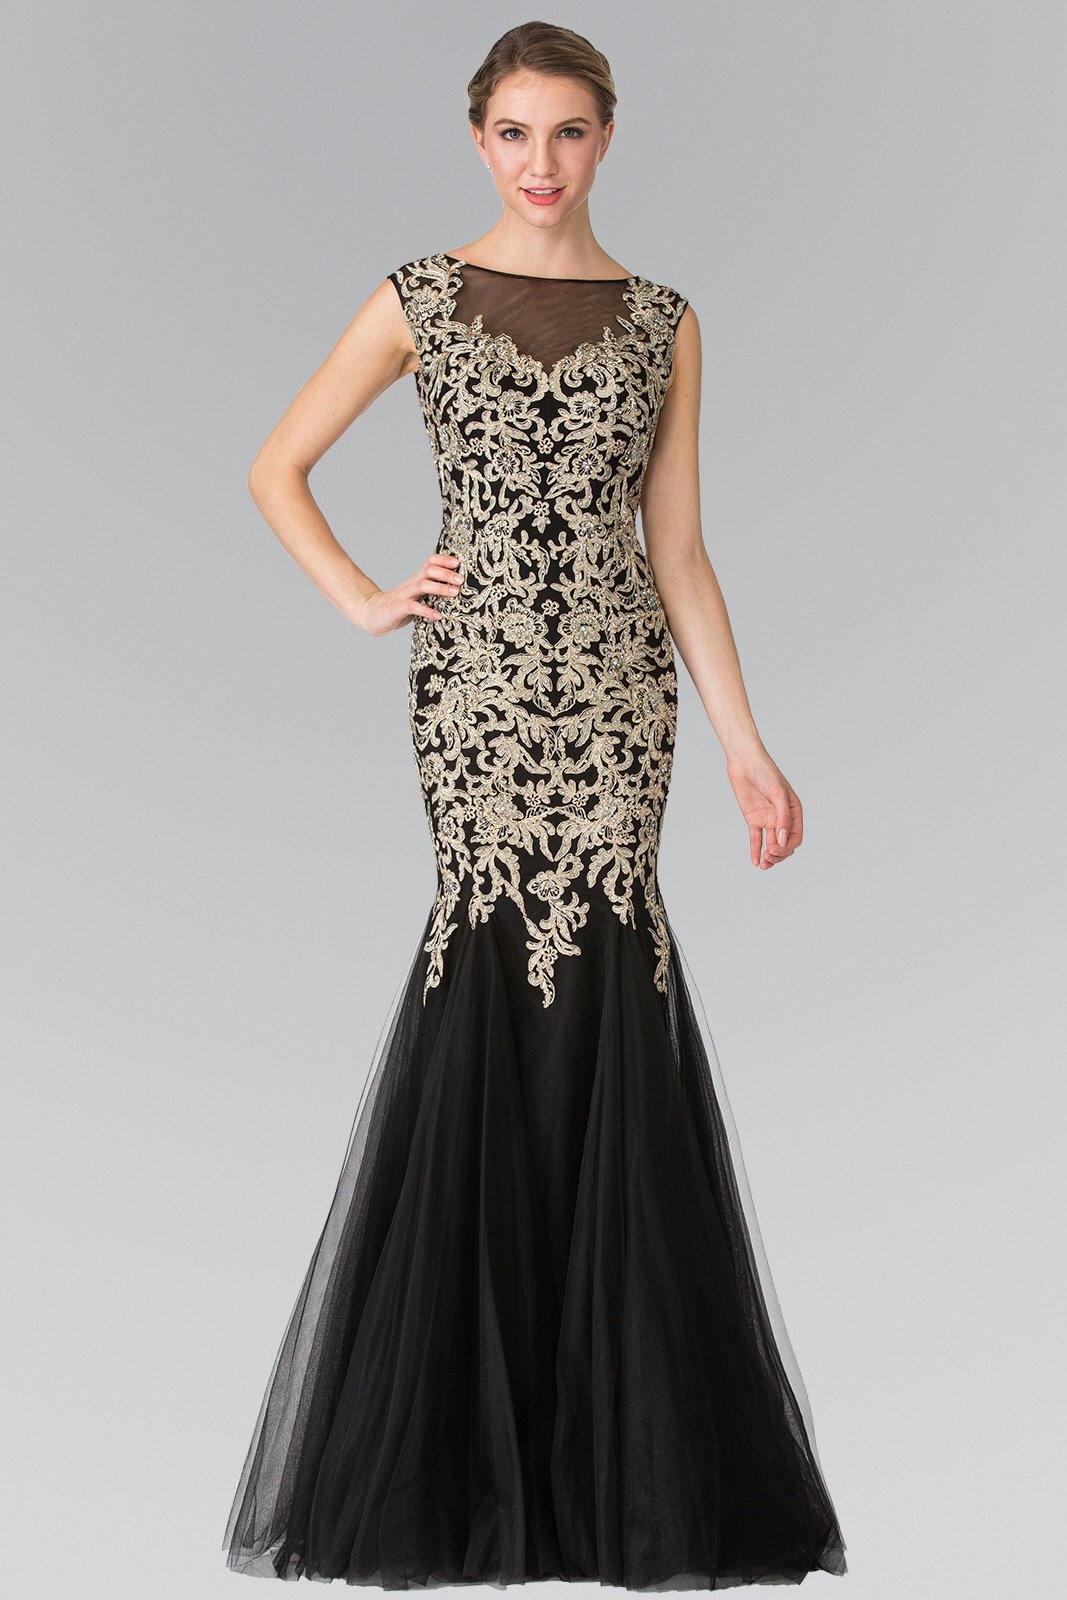 Full Embroidered Jersey Long Prom Dress - The Dress Outlet Elizabeth K